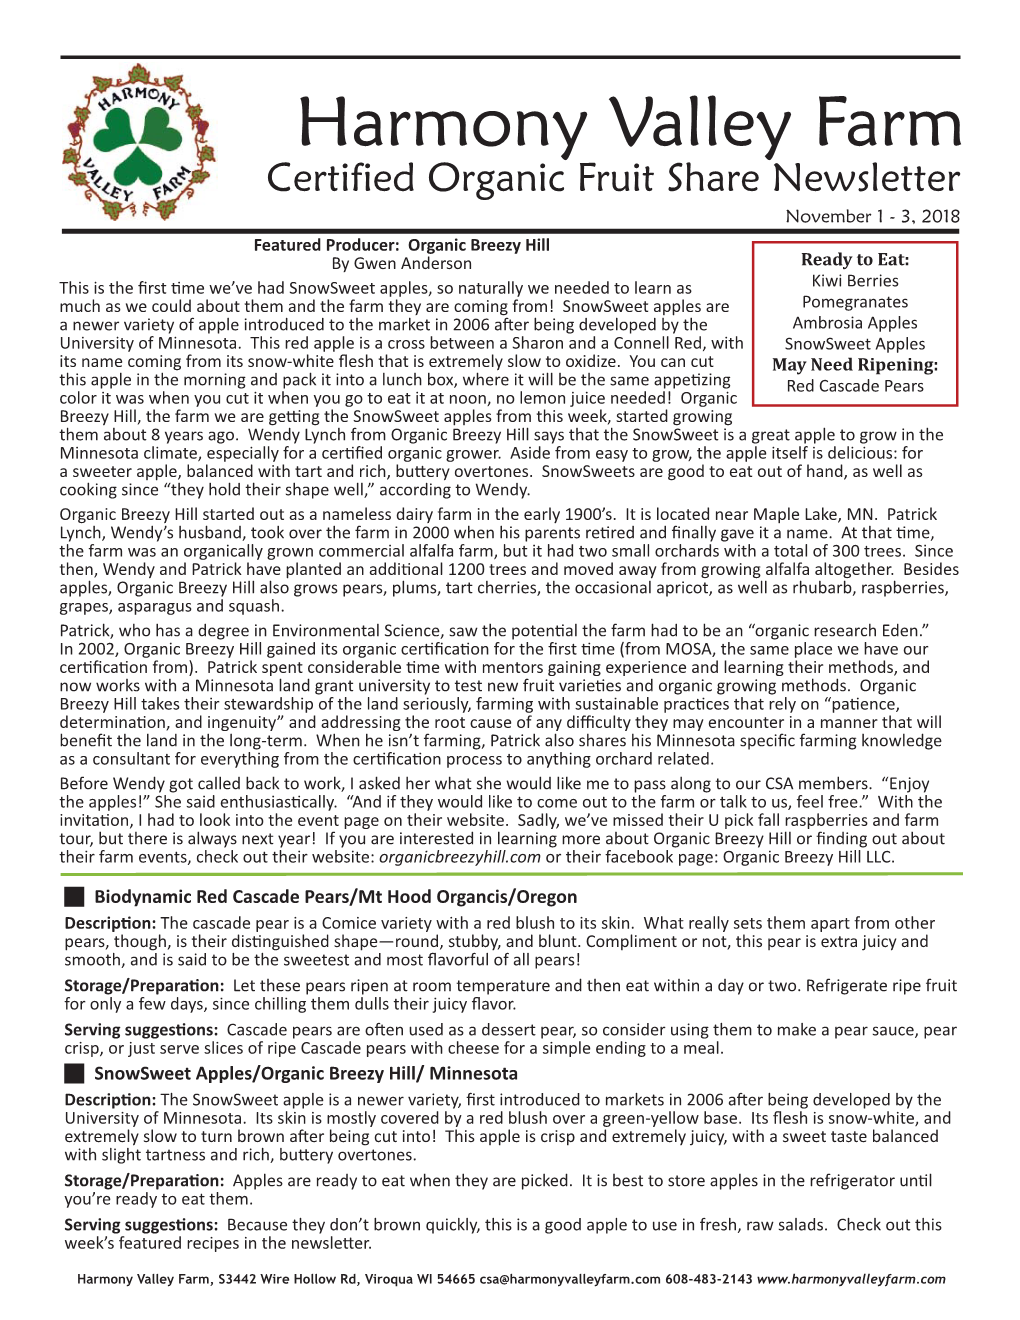 Certified Organic Fruit Share Newsletter